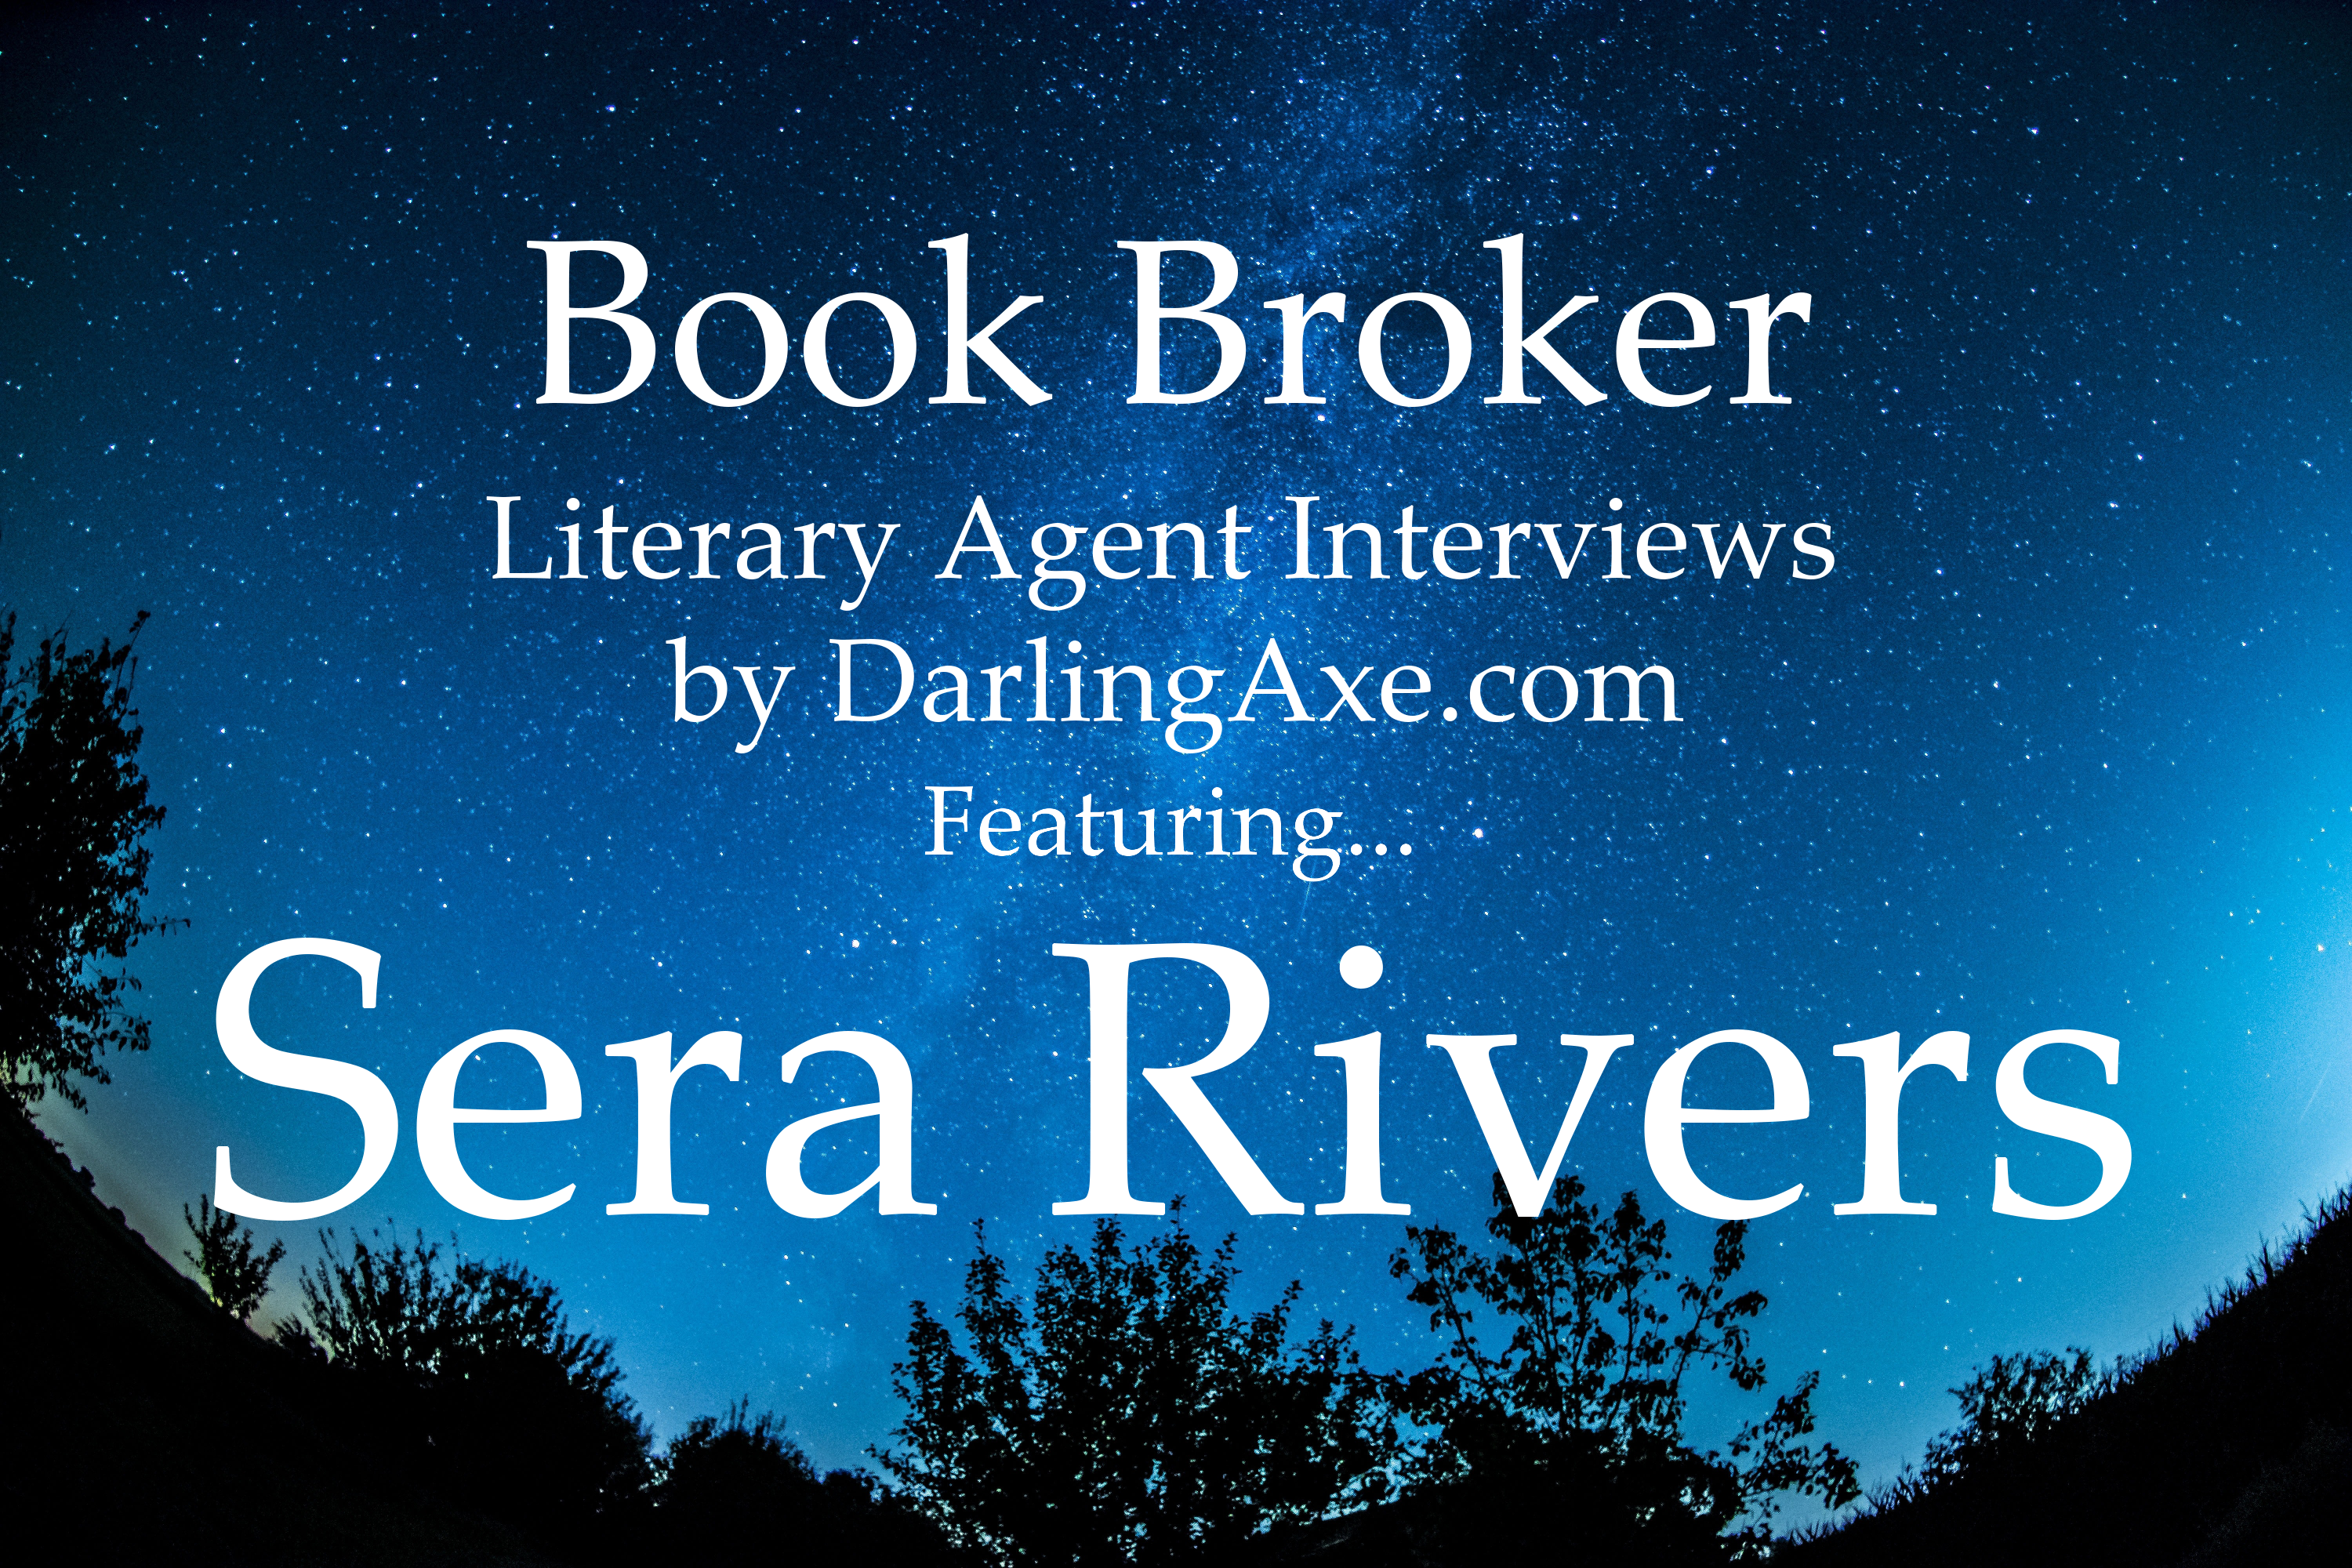 Book Broker—an interview with Sera Rivers